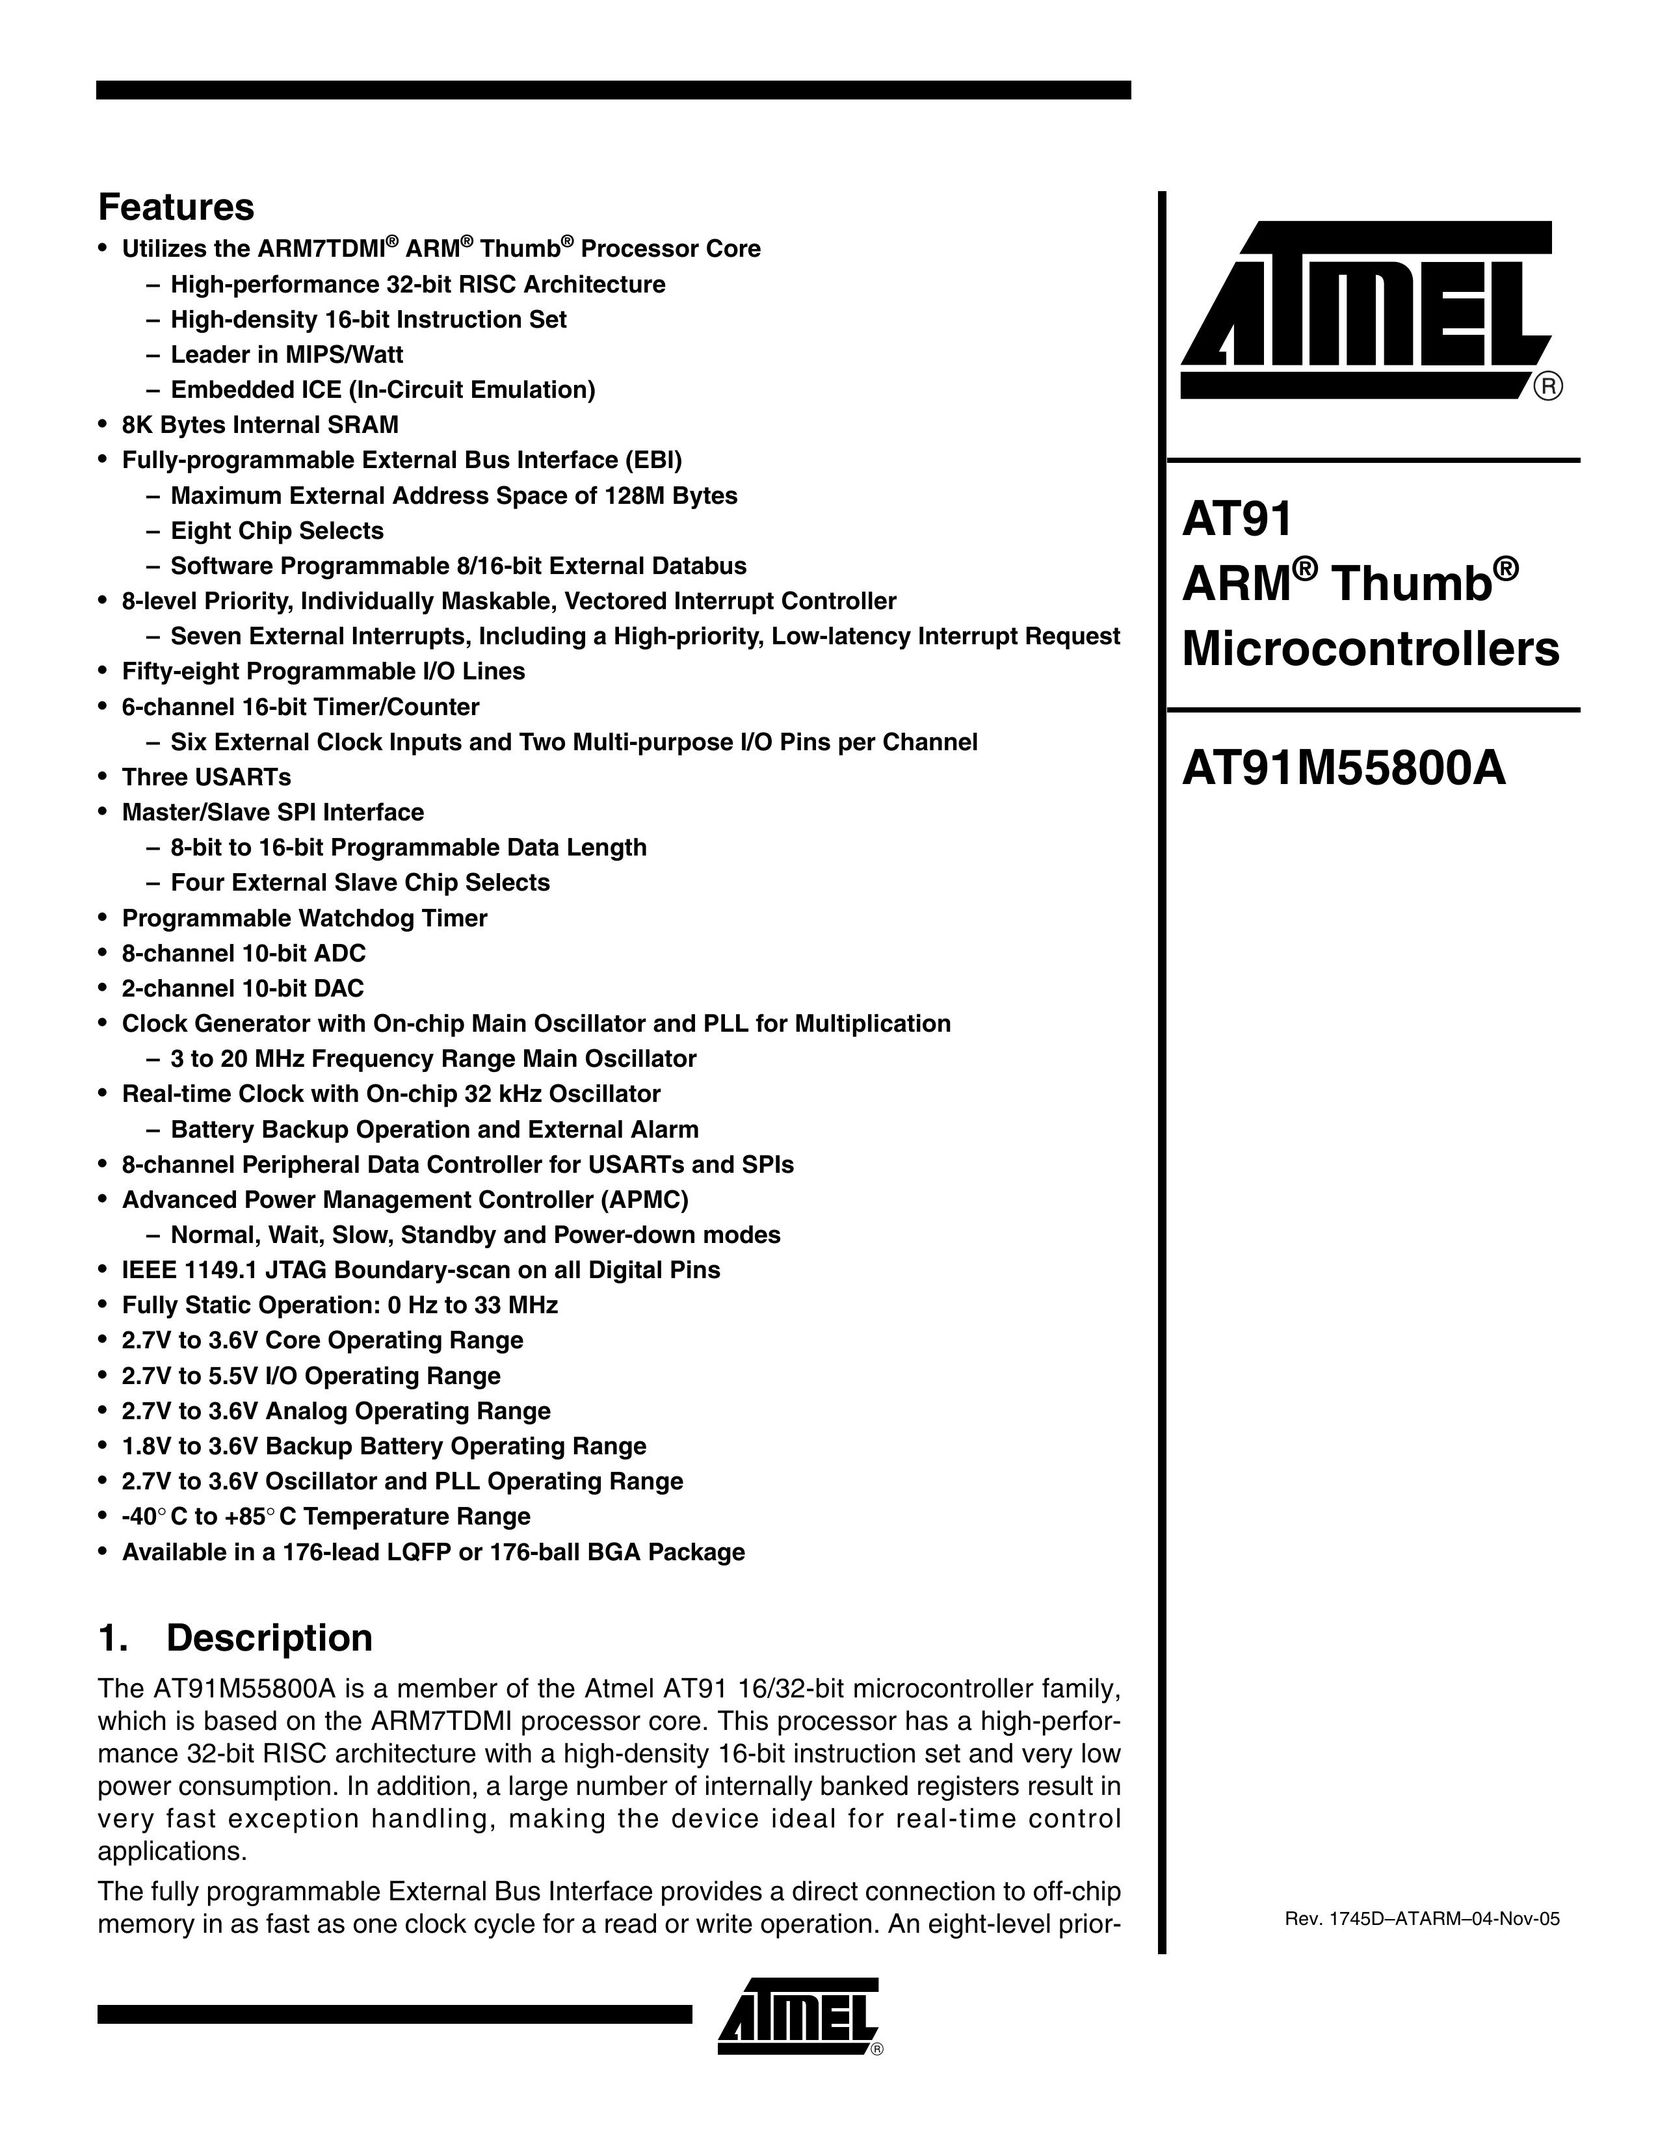 Atmel AT91M55800A Answering Machine User Manual